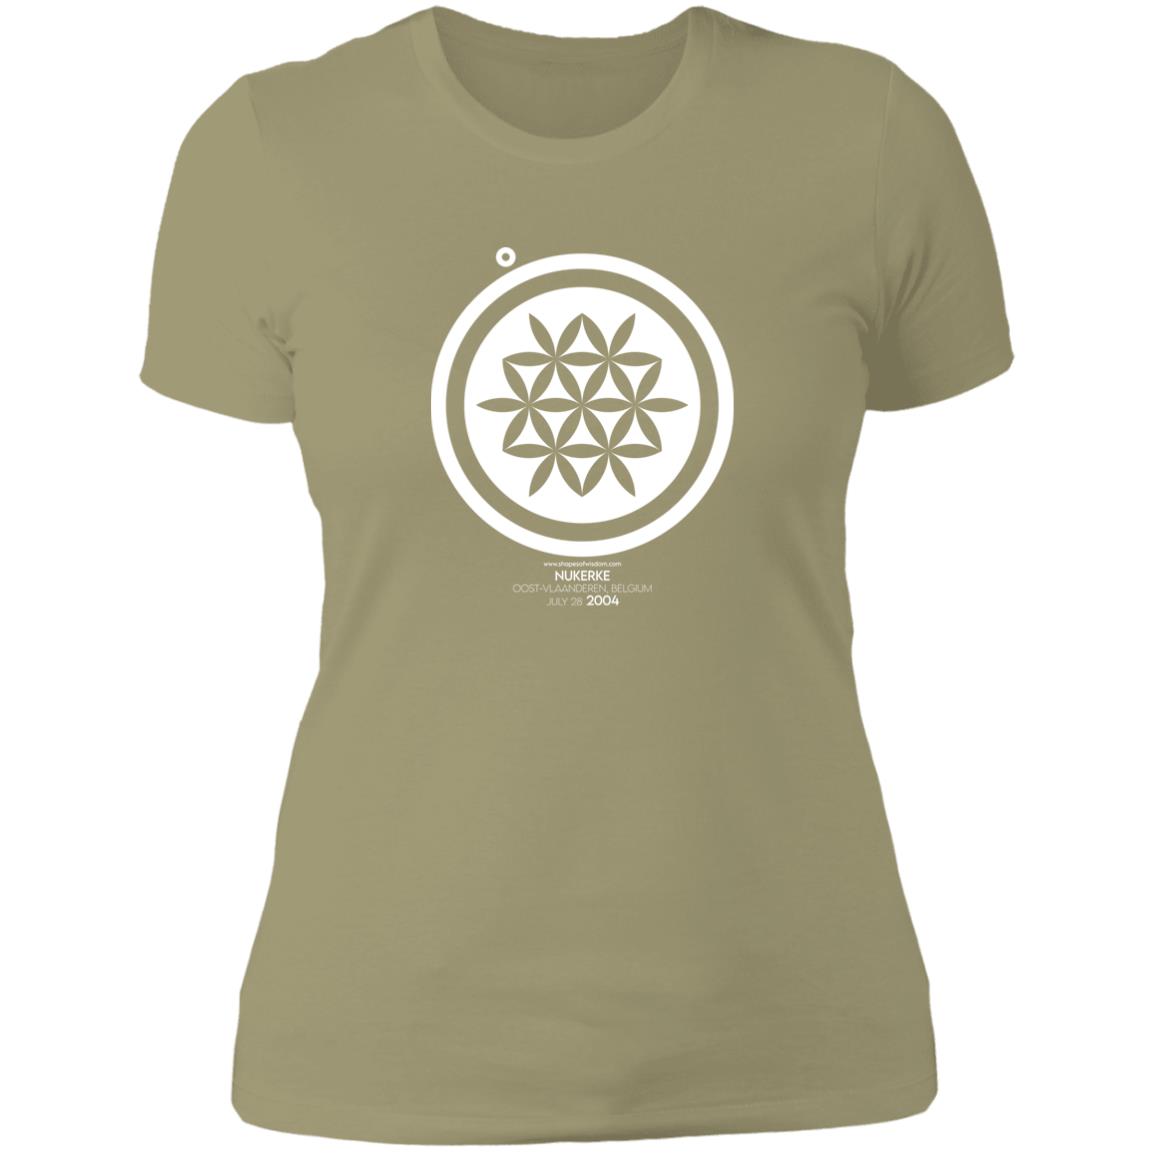 Crop Circle Basic T-Shirt - Nukerke